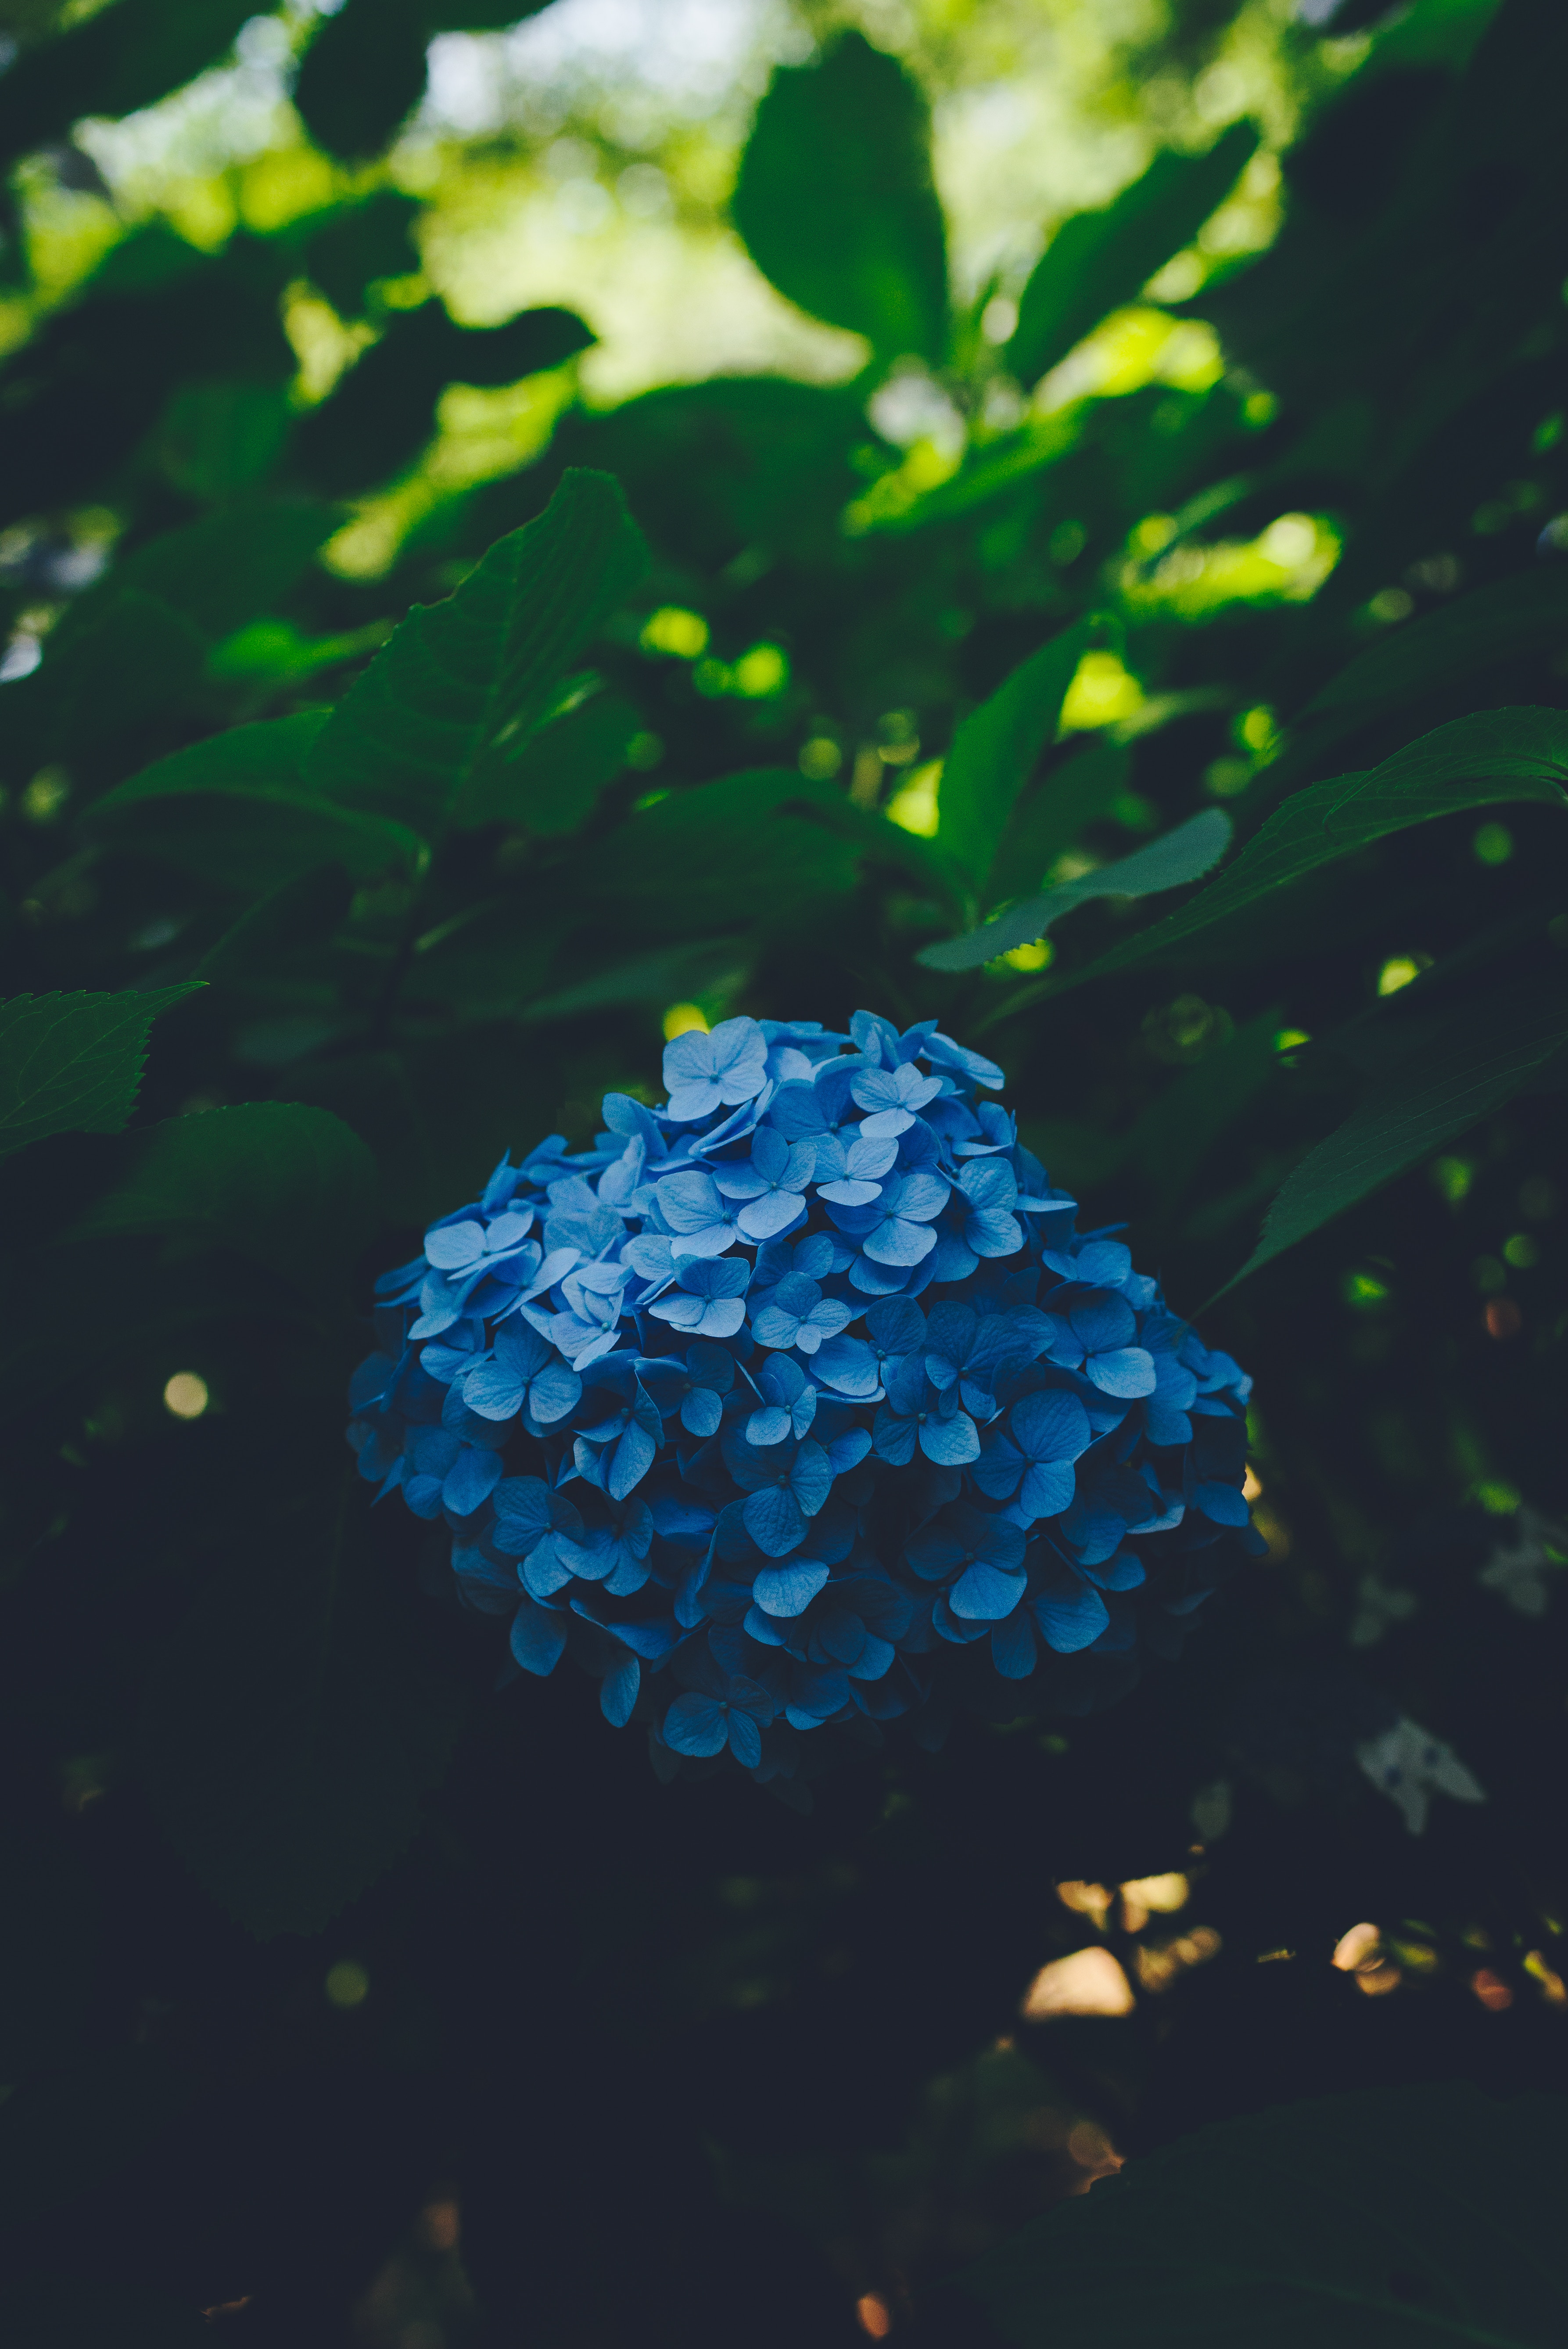 hydrangea, leaves, flowers, blue, smooth, blur, bush, inflorescences, inflorescence